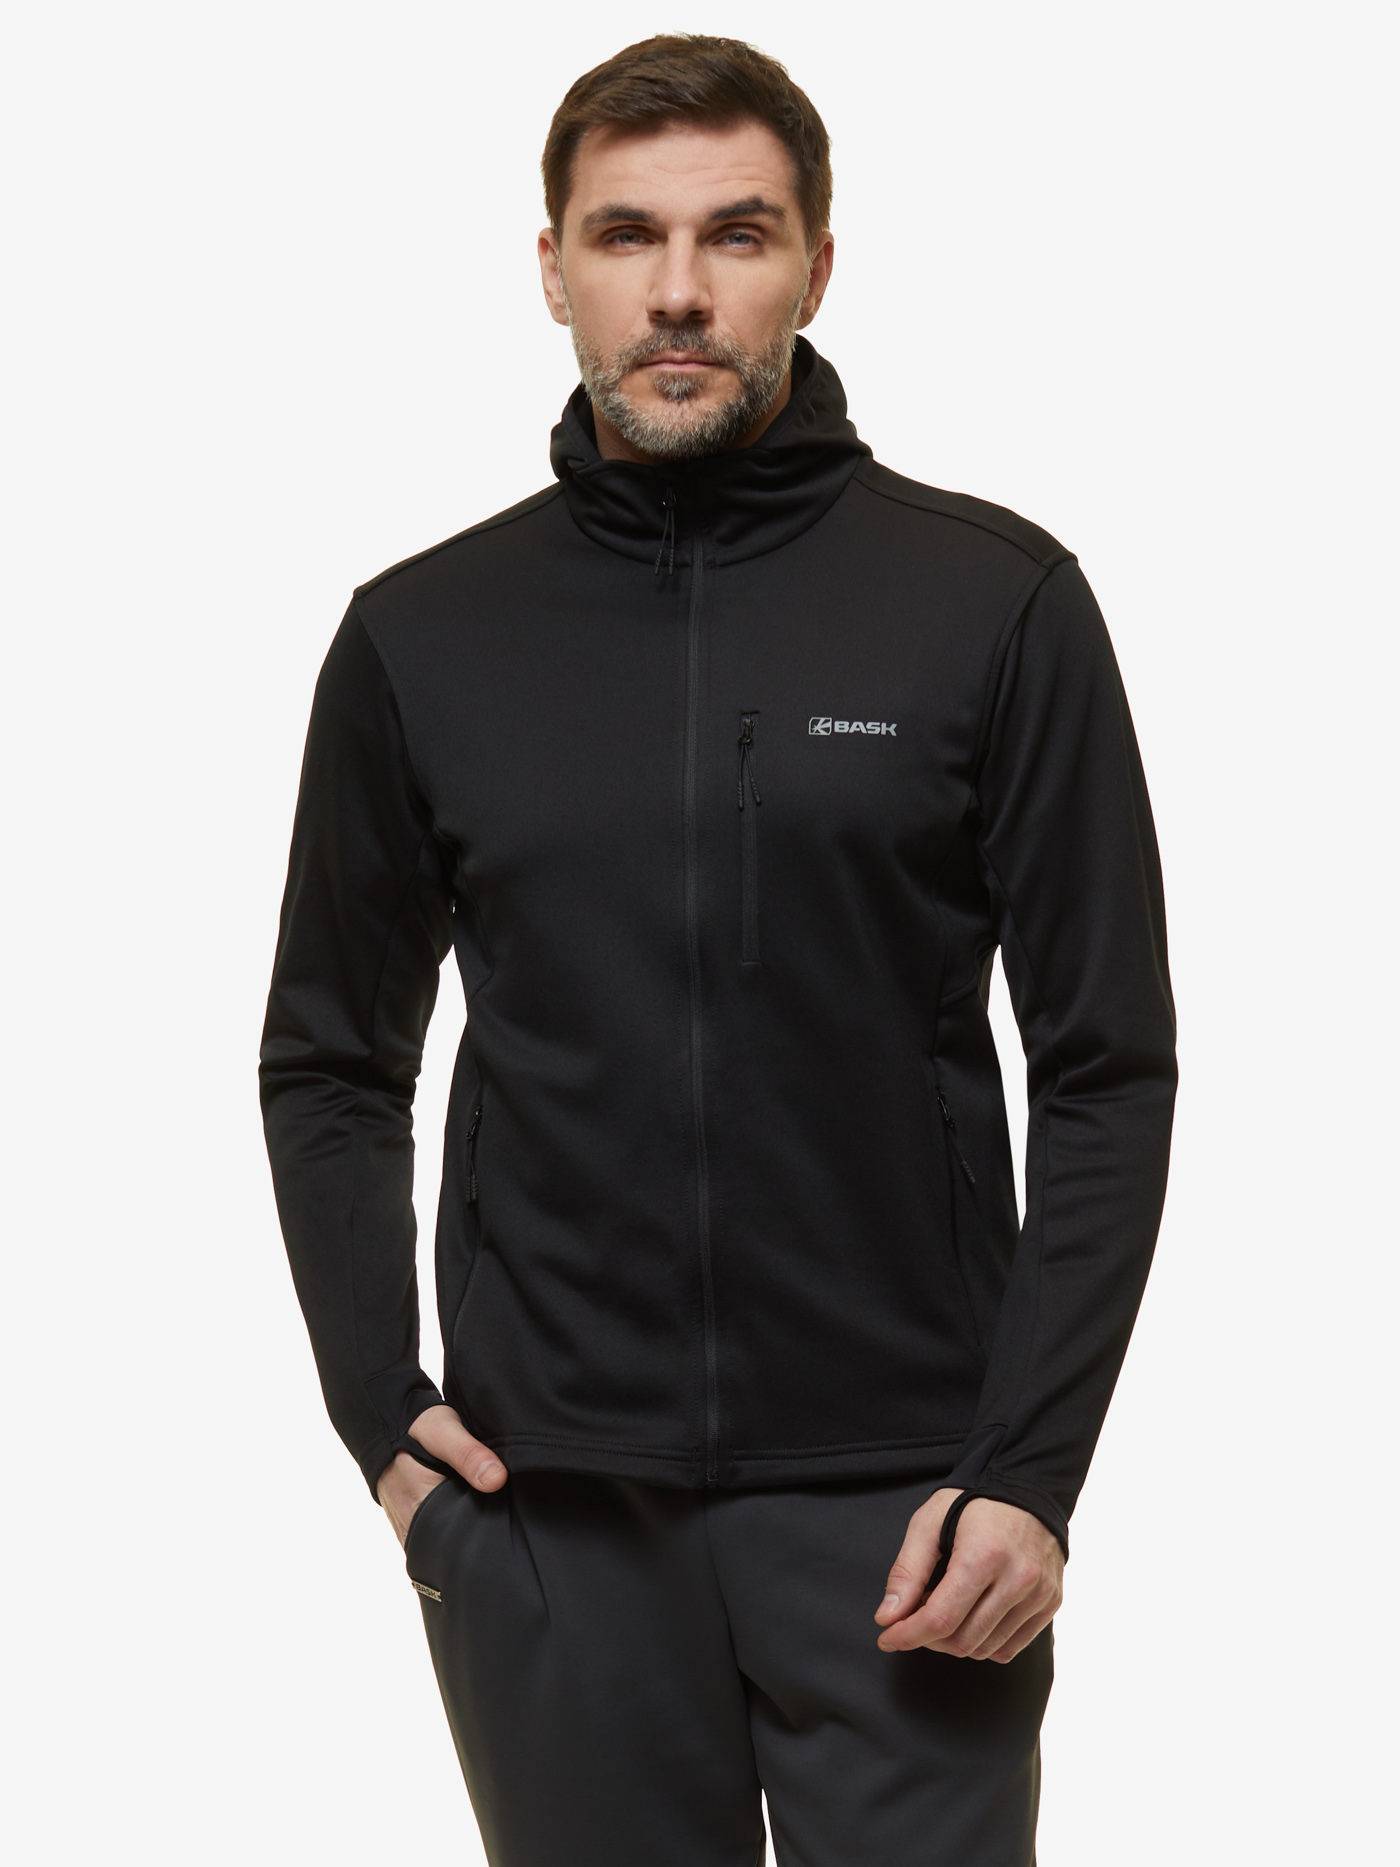 Куртка BASK, размер 46, цвет черный 1246V2-9009-046 Champion v2 - фото 3